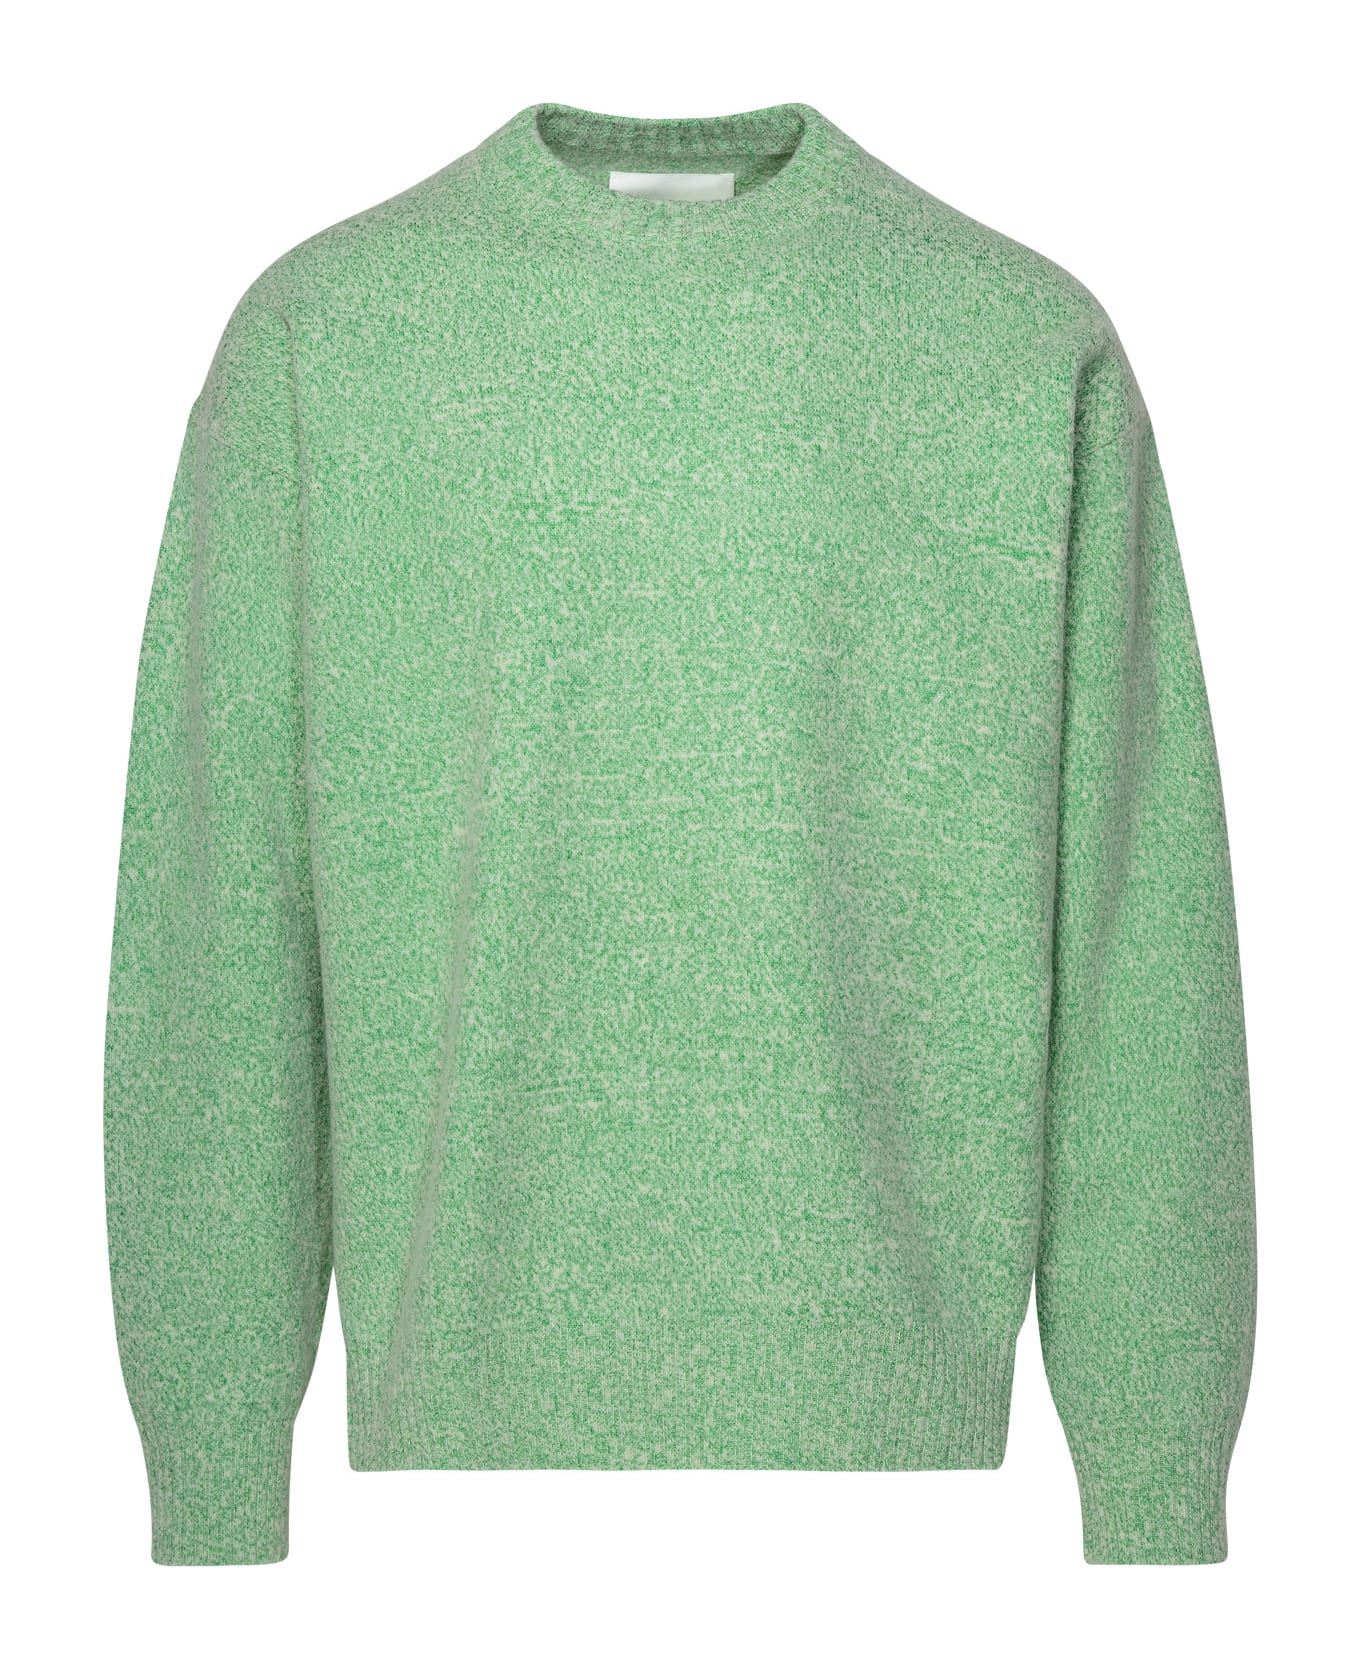 Jil Sander Green Wool Blend Sweater - Green